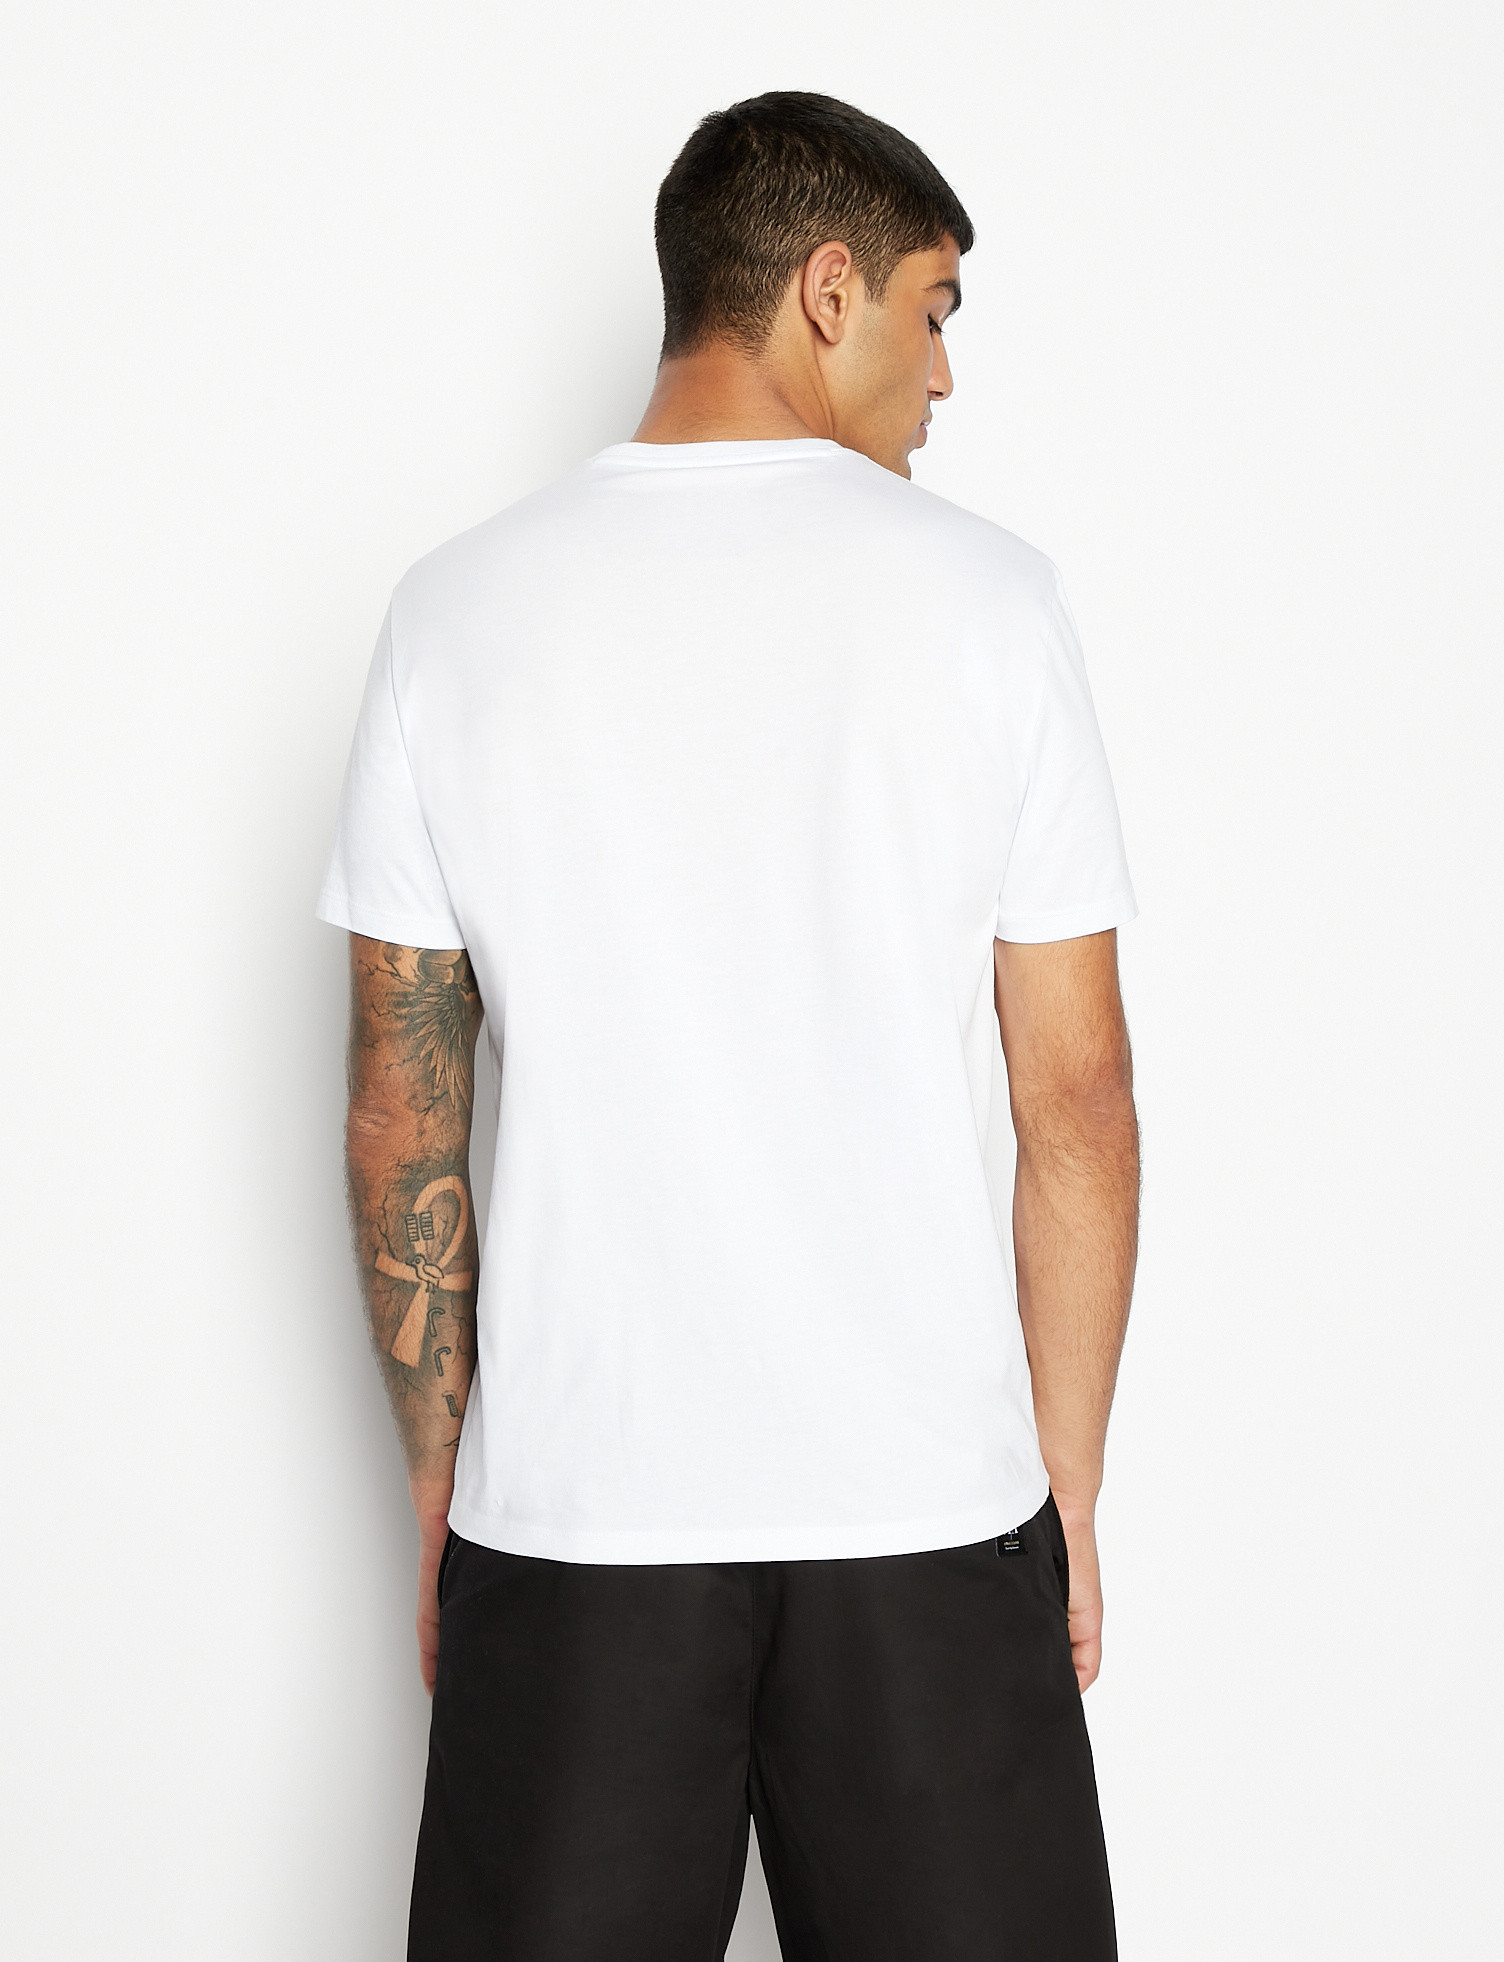 Armani Exchange - T-shirt regular fit in cotone con logo, Bianco, large image number 4